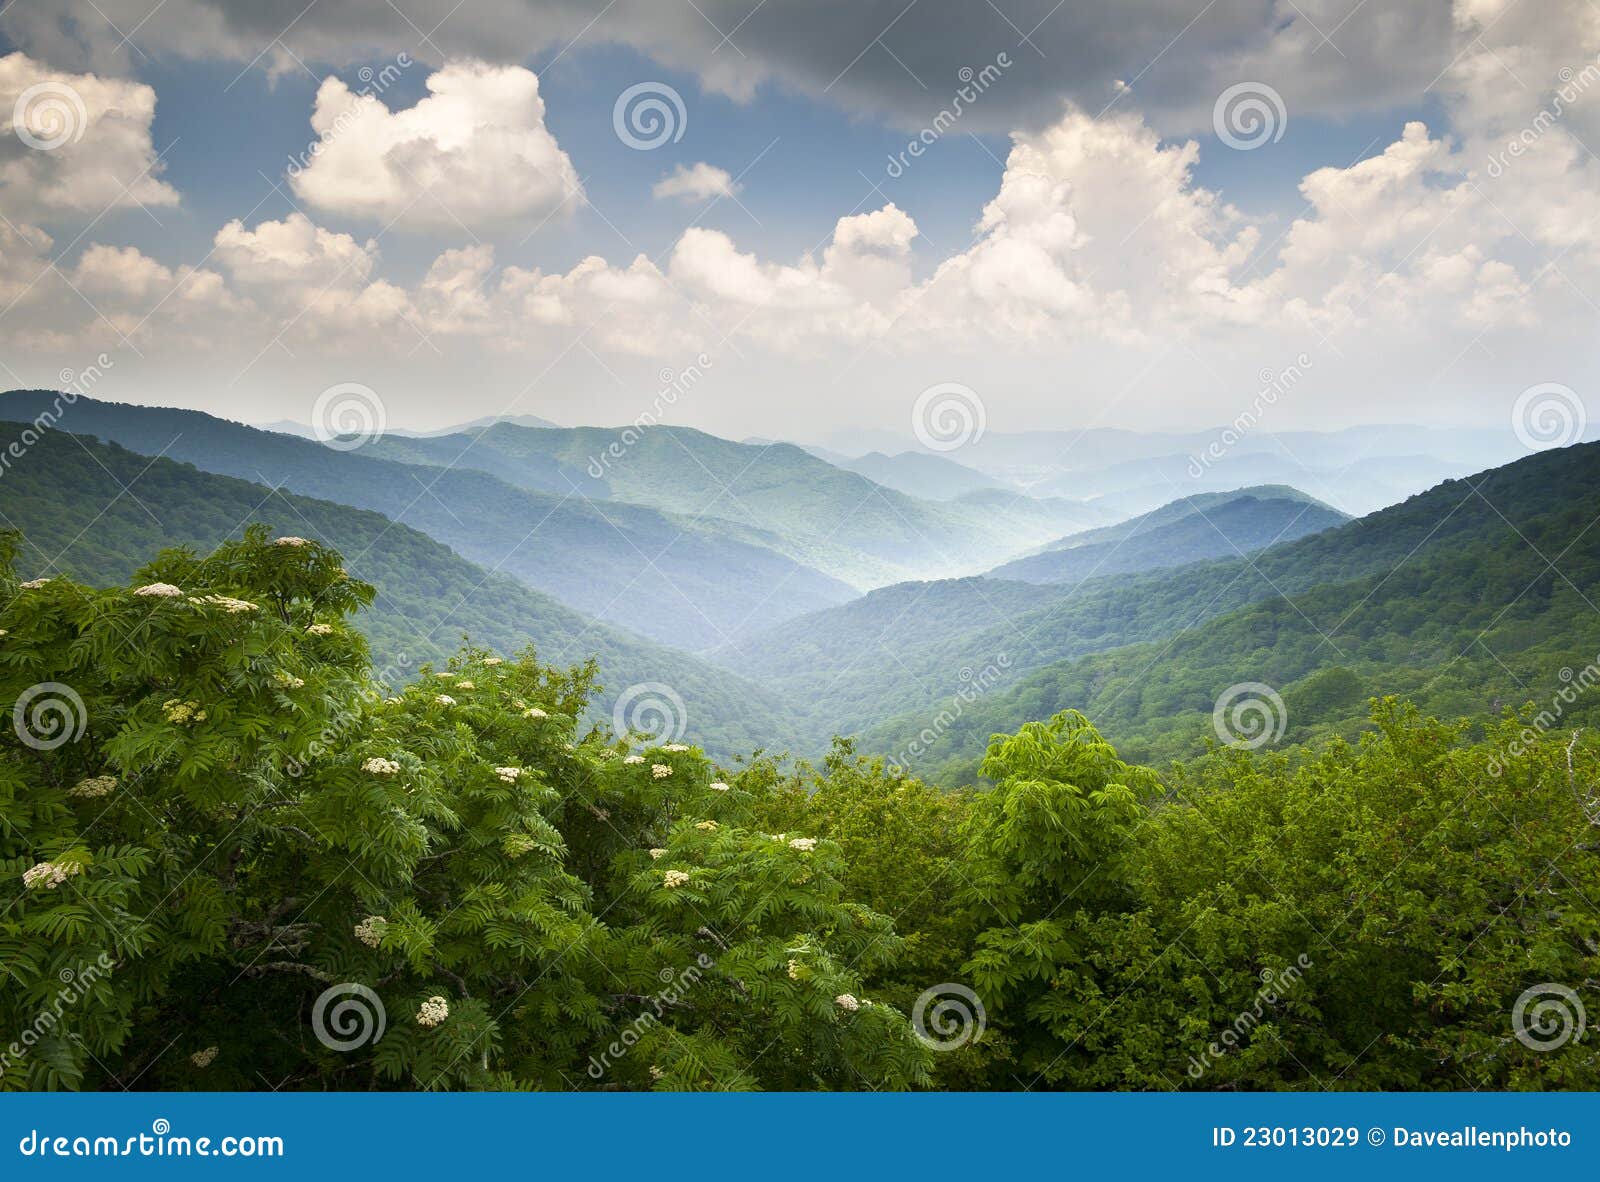 blue ridge parkway scenic mountains overlook wnc